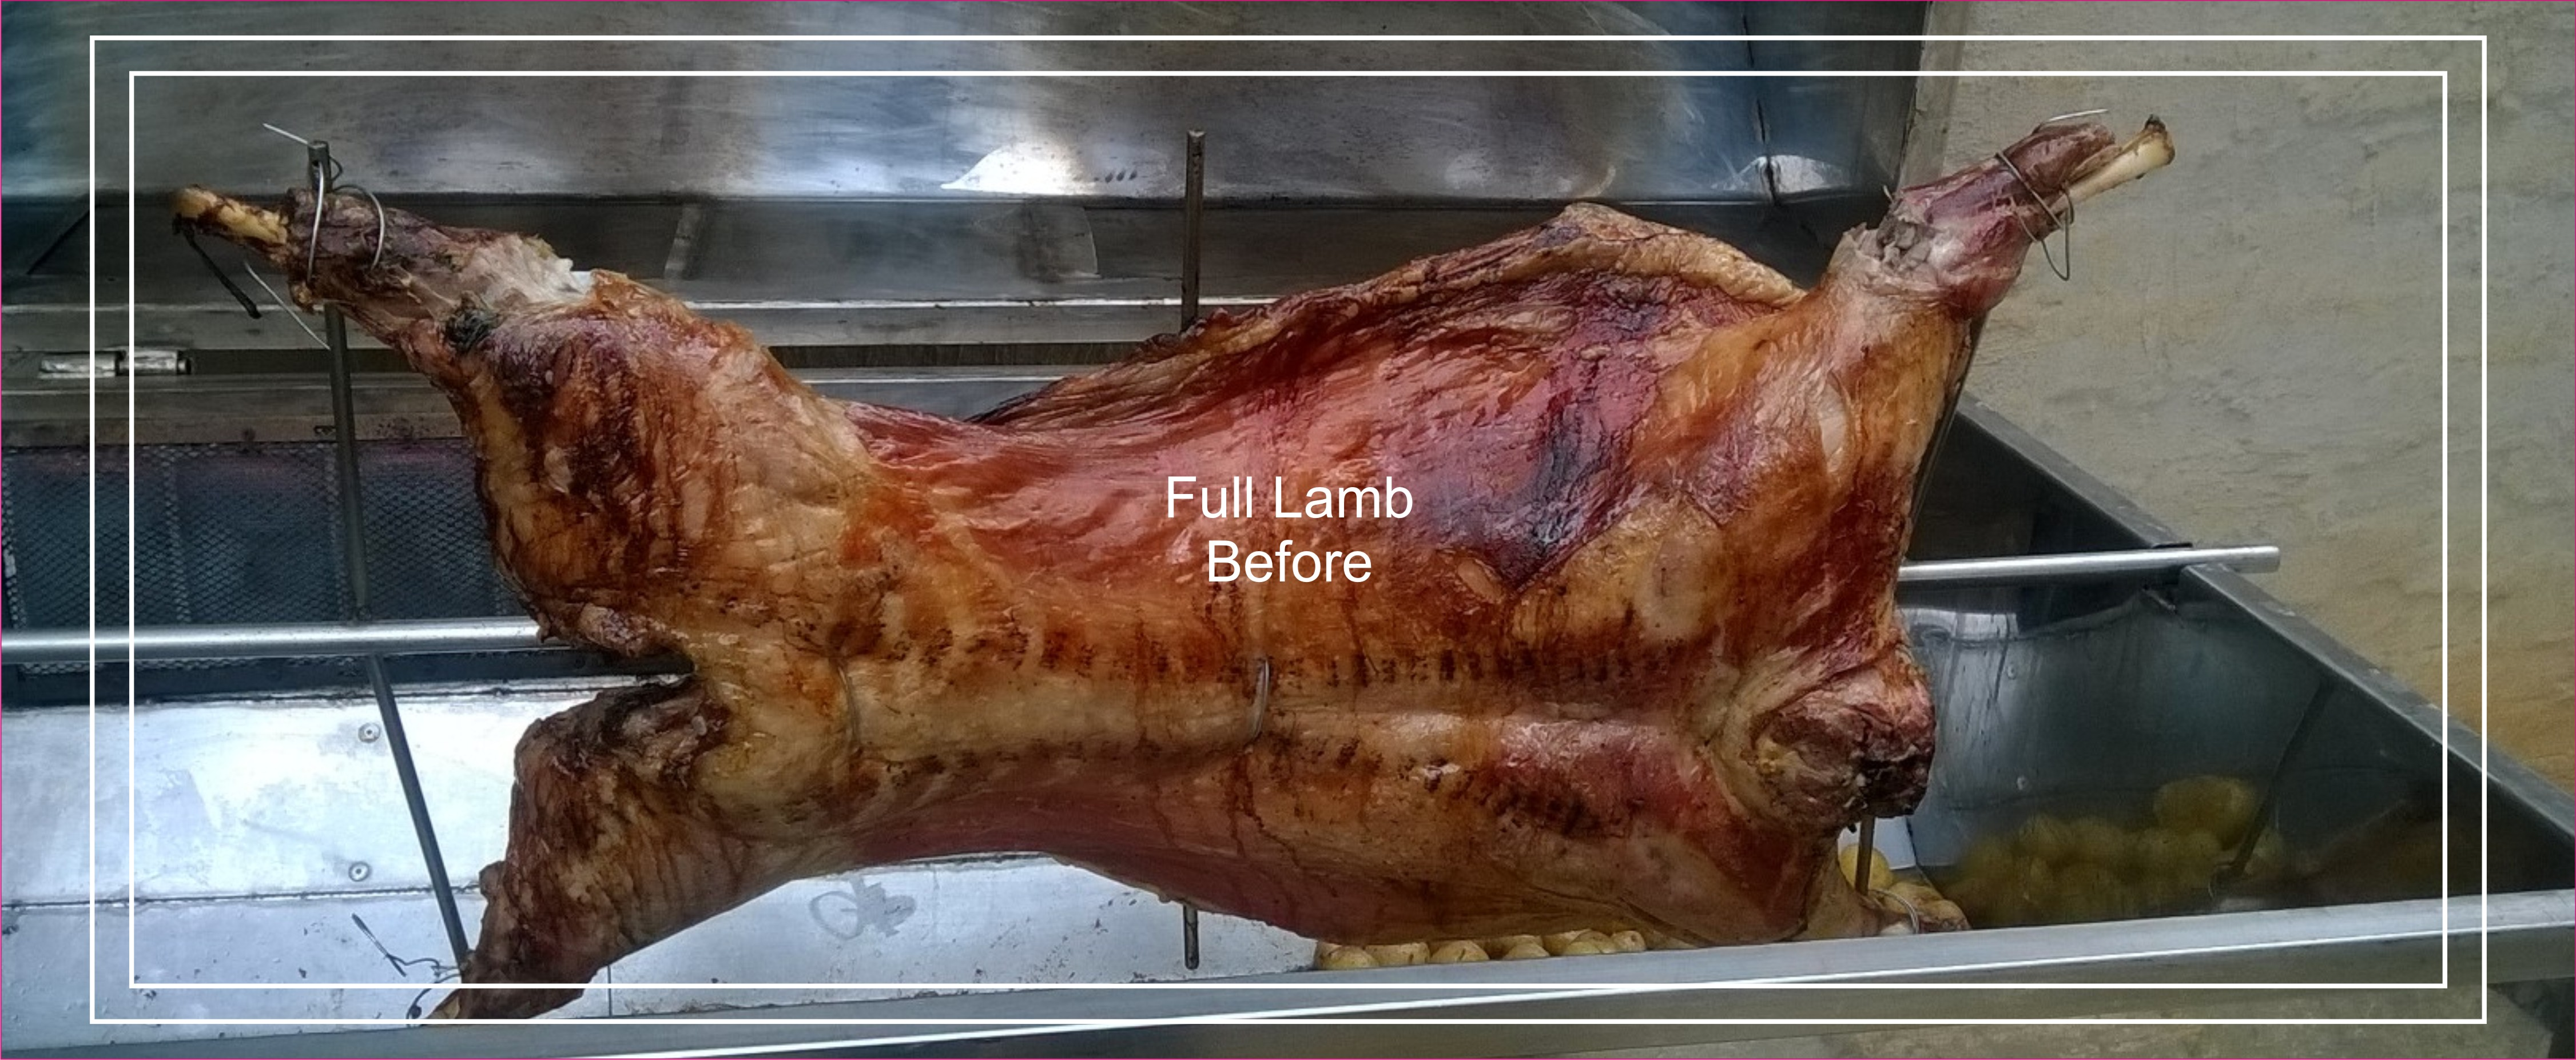 Full Lamb in a spitbraai machine 